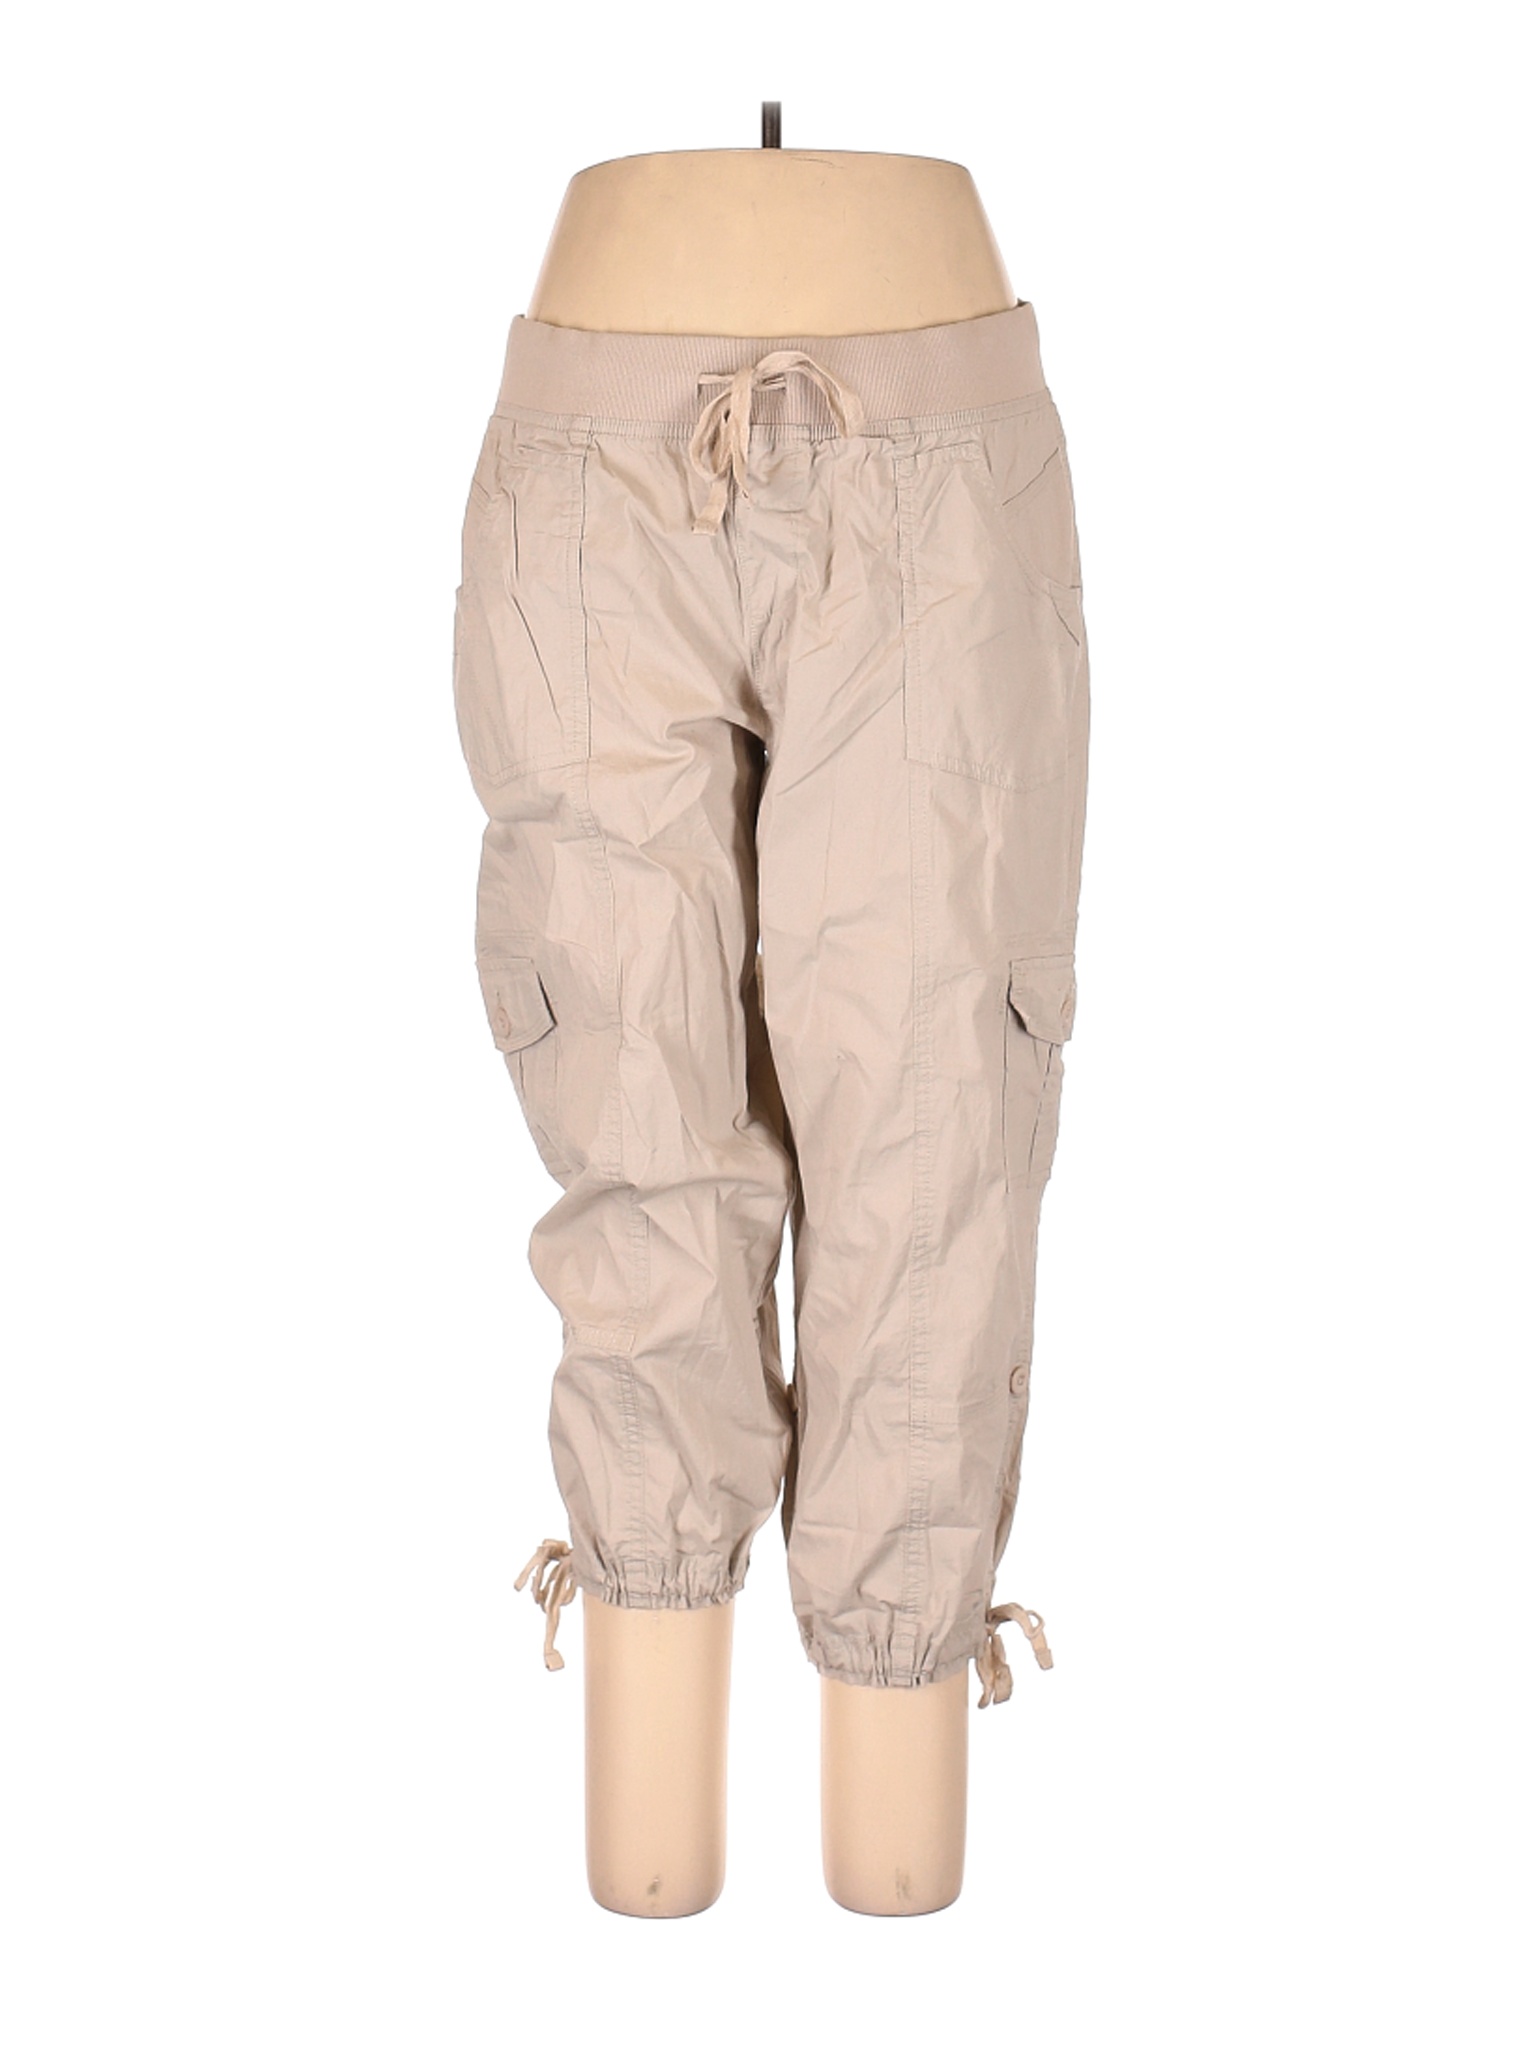 Alki'i Women Brown Cargo Pants XL | eBay